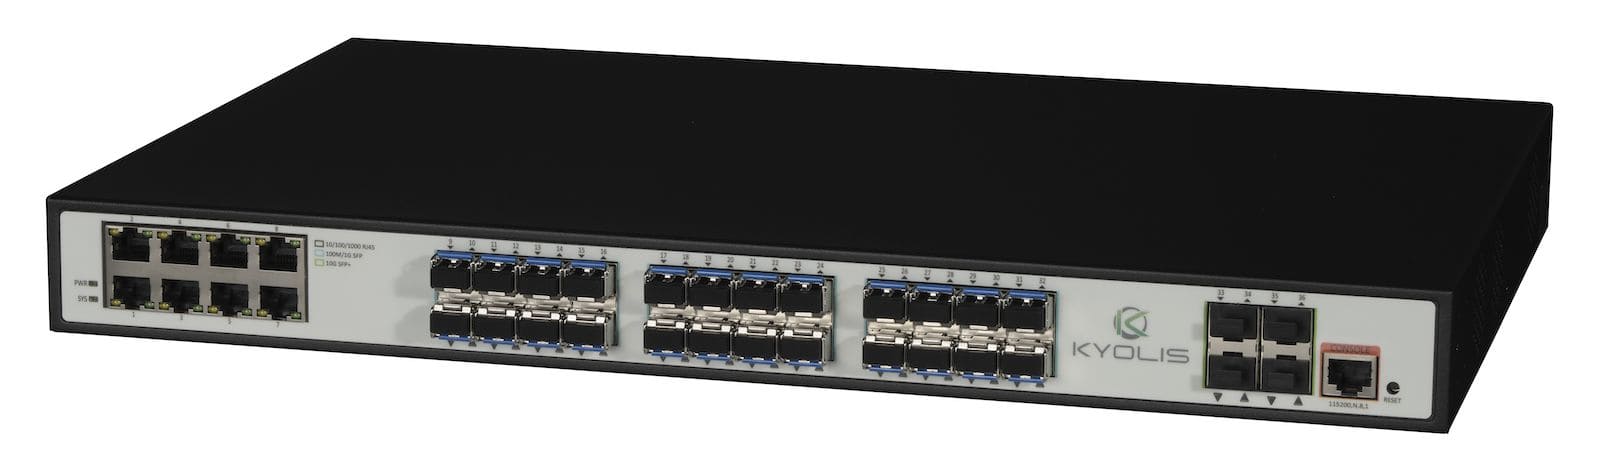 switch-ethernet-gigabit-36-ports-administrable-L2-SOR36828M-kyolis